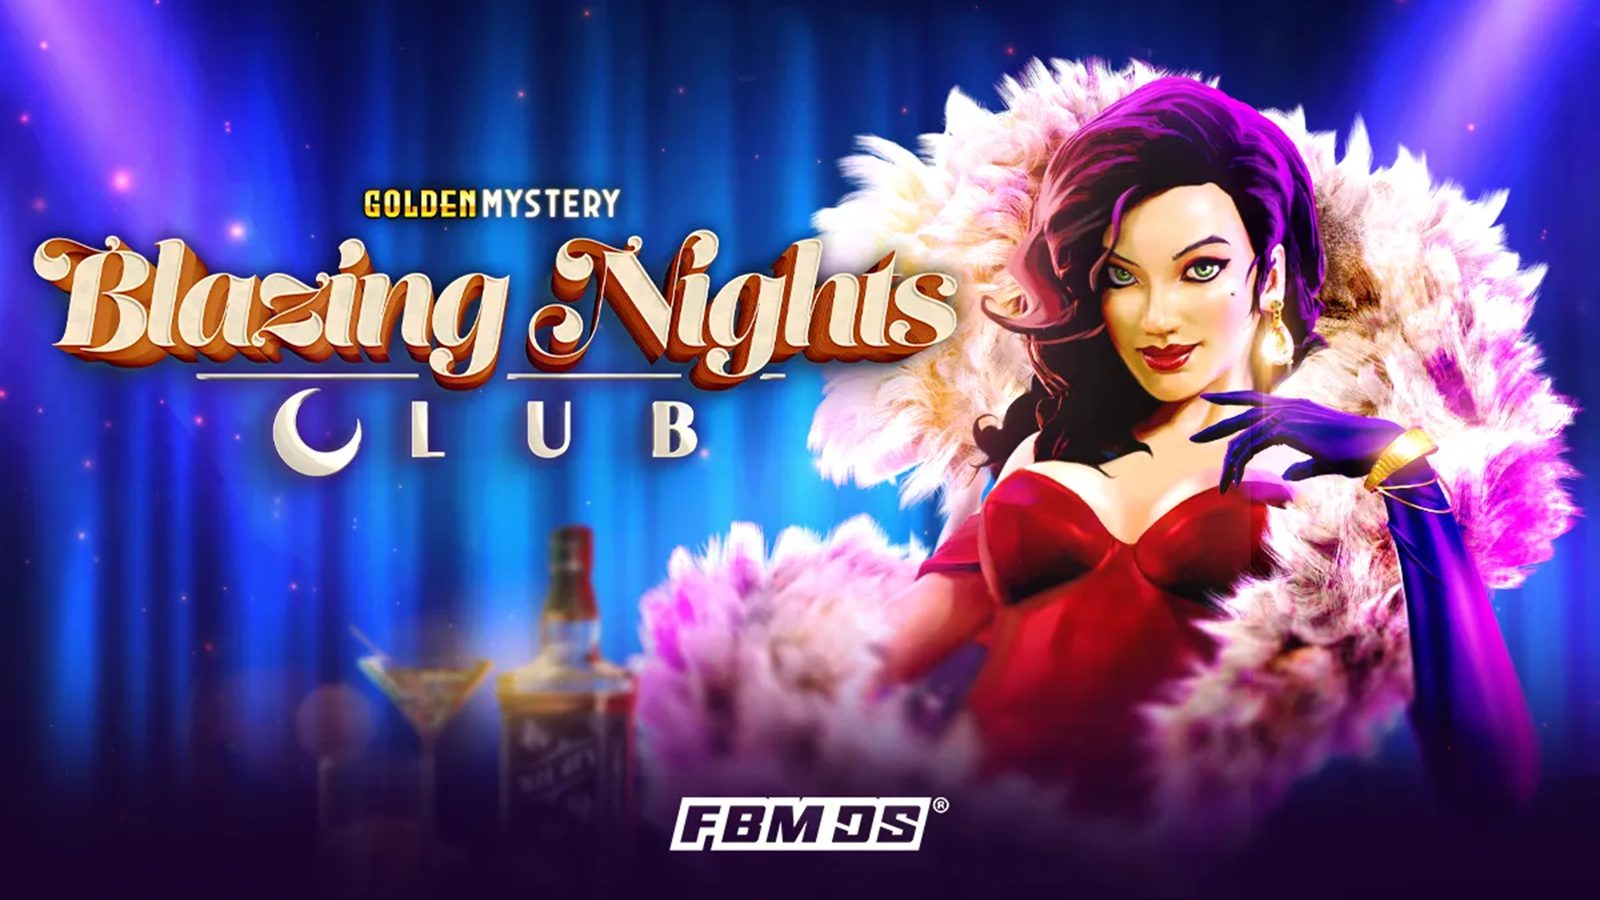 FBMDS Presents Blazing Nights Club